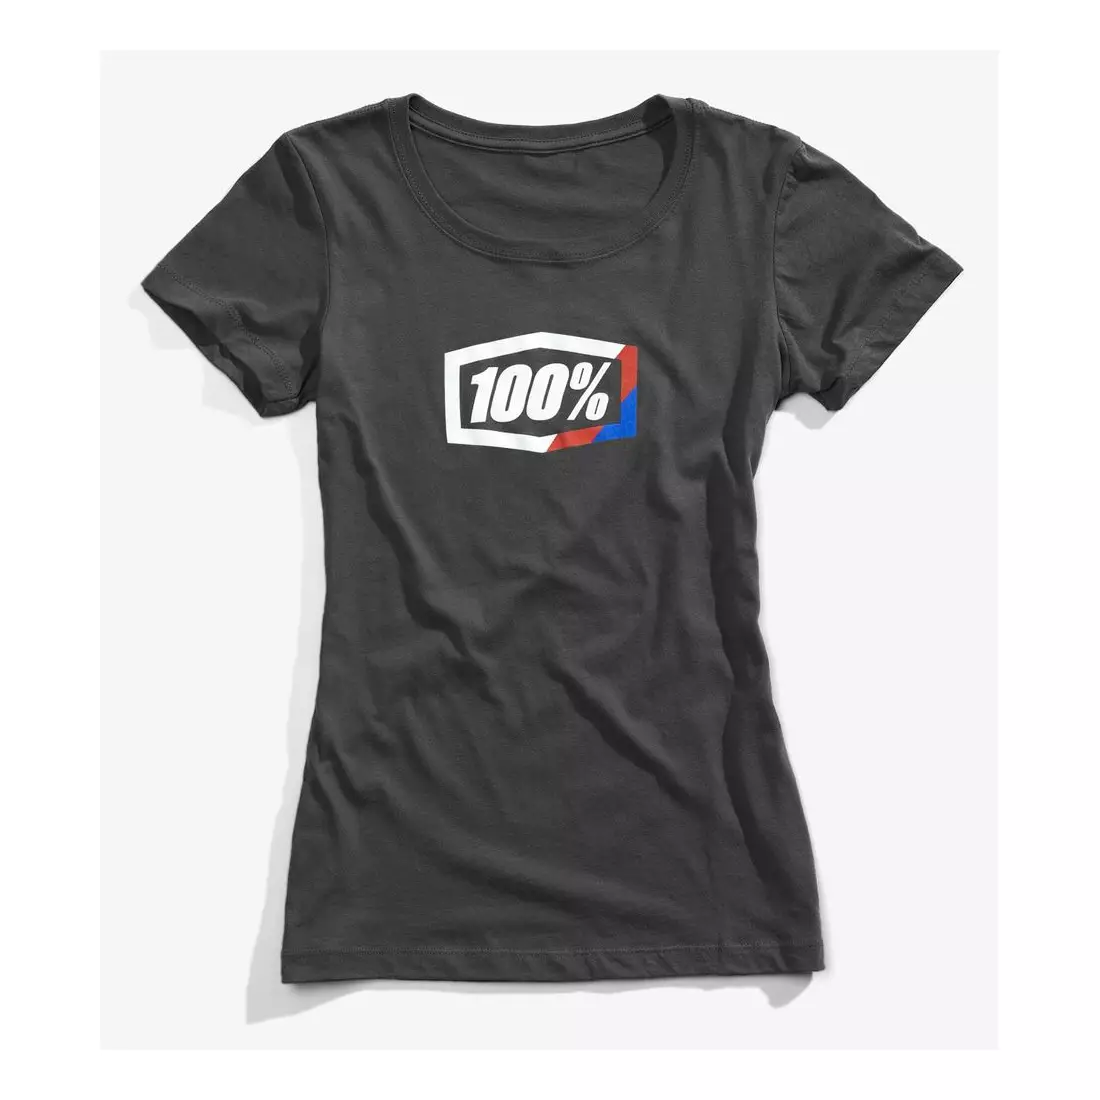 100% ladies' short sleeve T-shirt stripes charcoal STO-28104-052-10